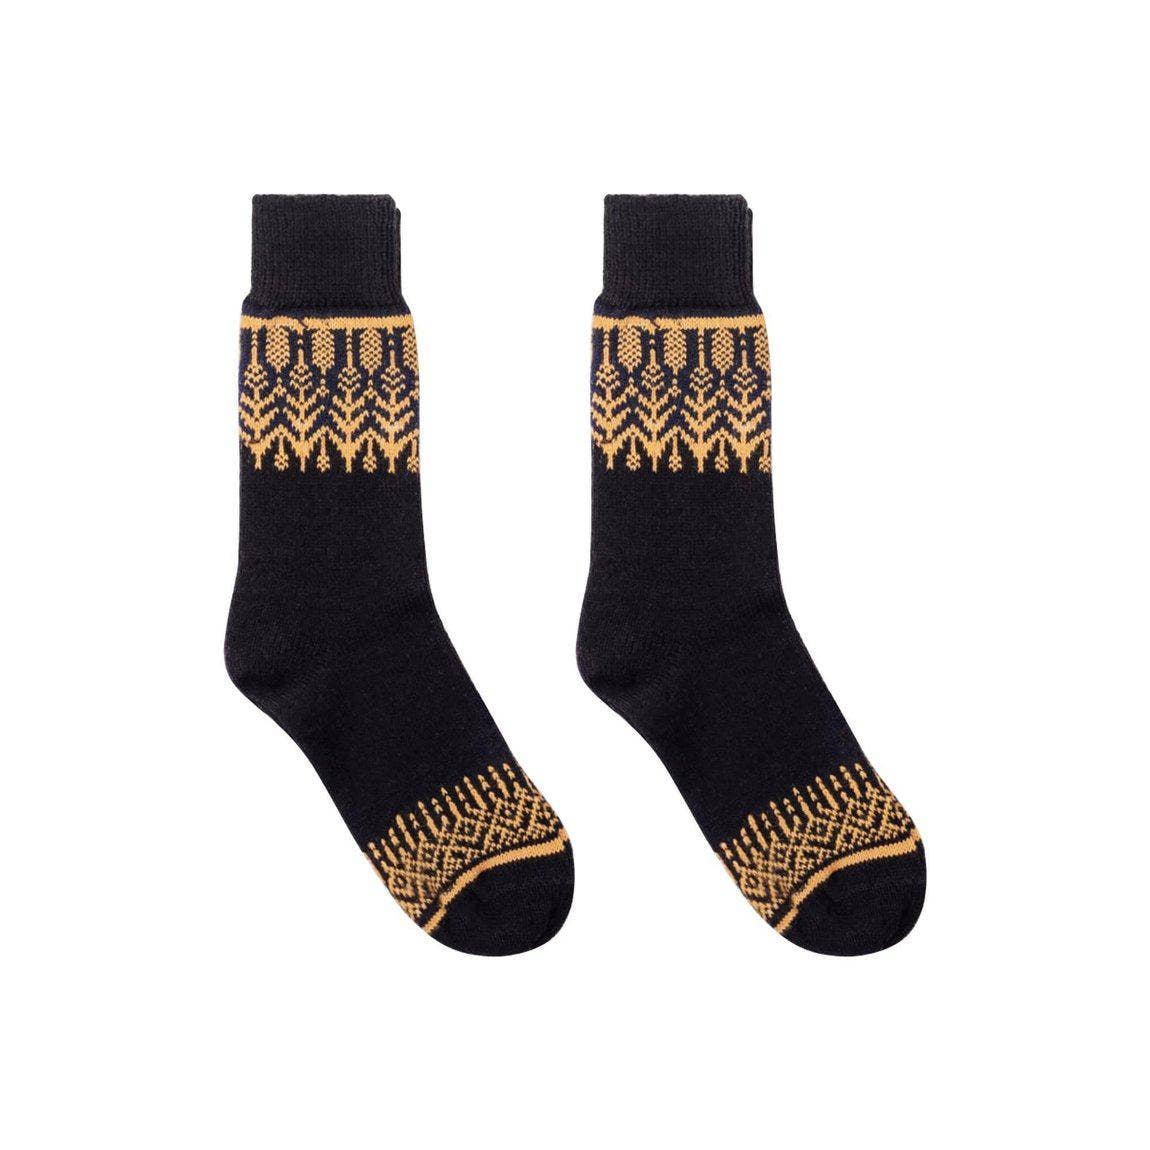 Nordic Merino Wool Socks (Yule - Black and Gold) - Unisex: Medium and Large